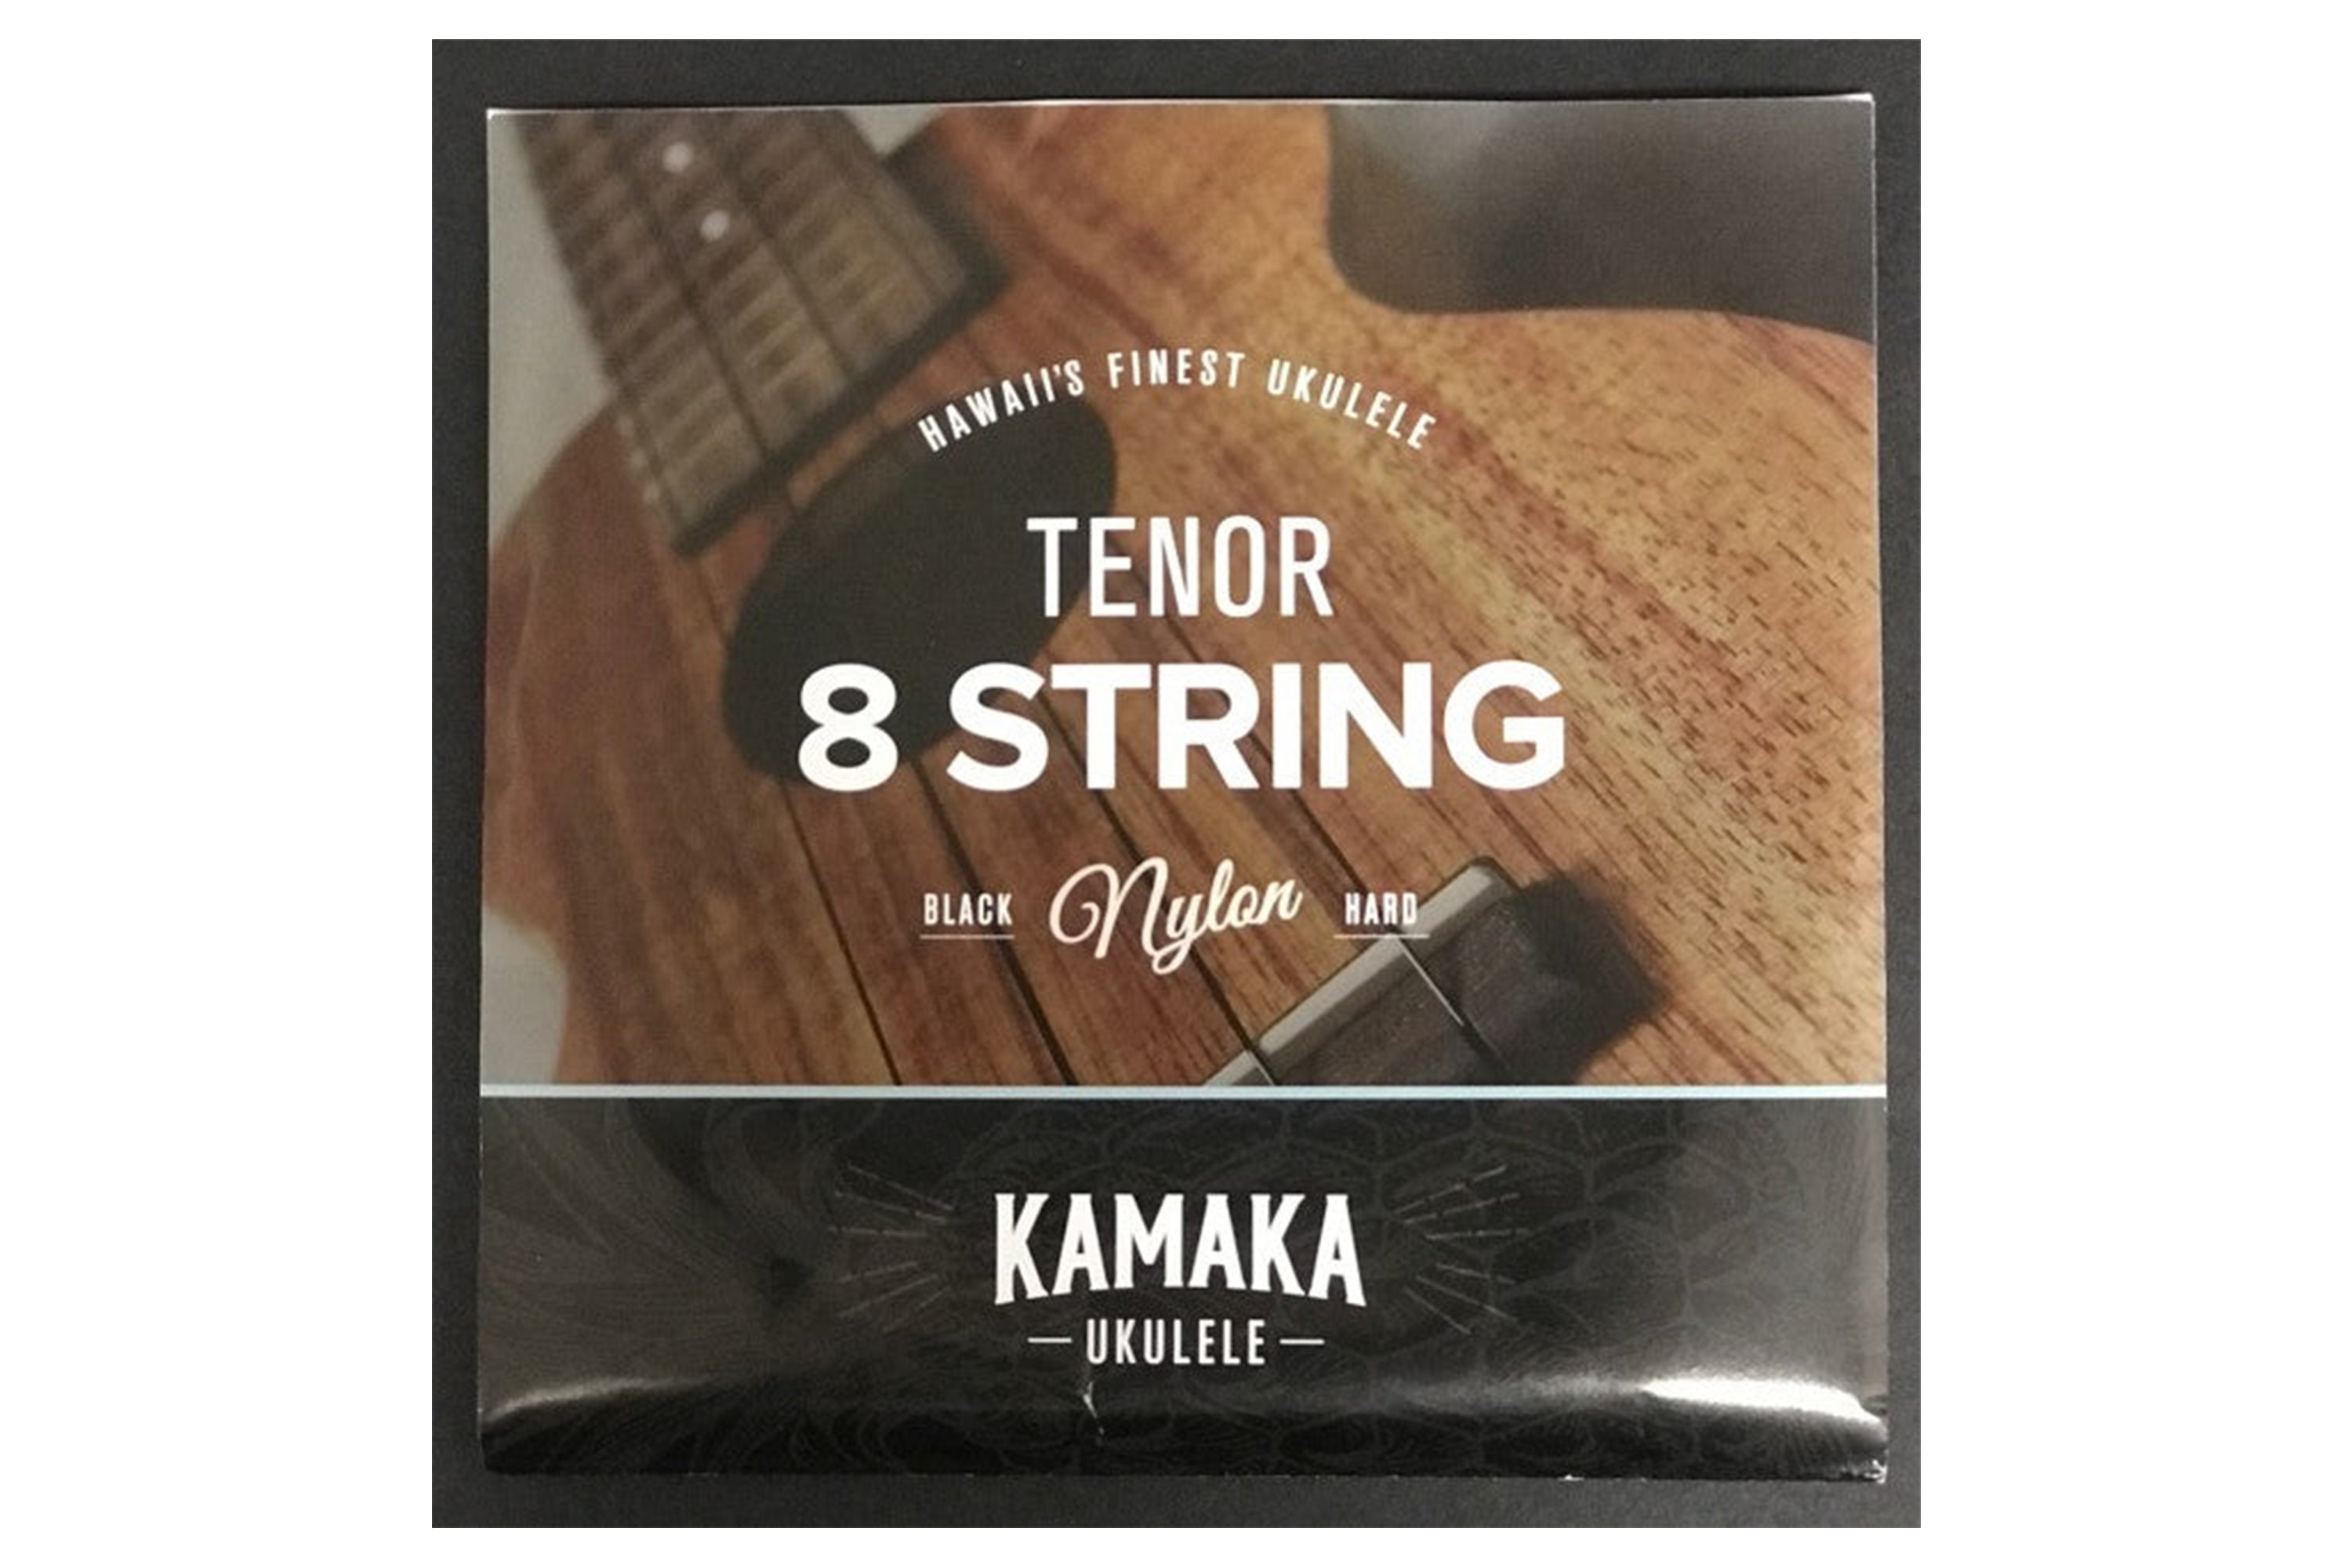 Kamaka 8-String Tenor Ukulele Strings